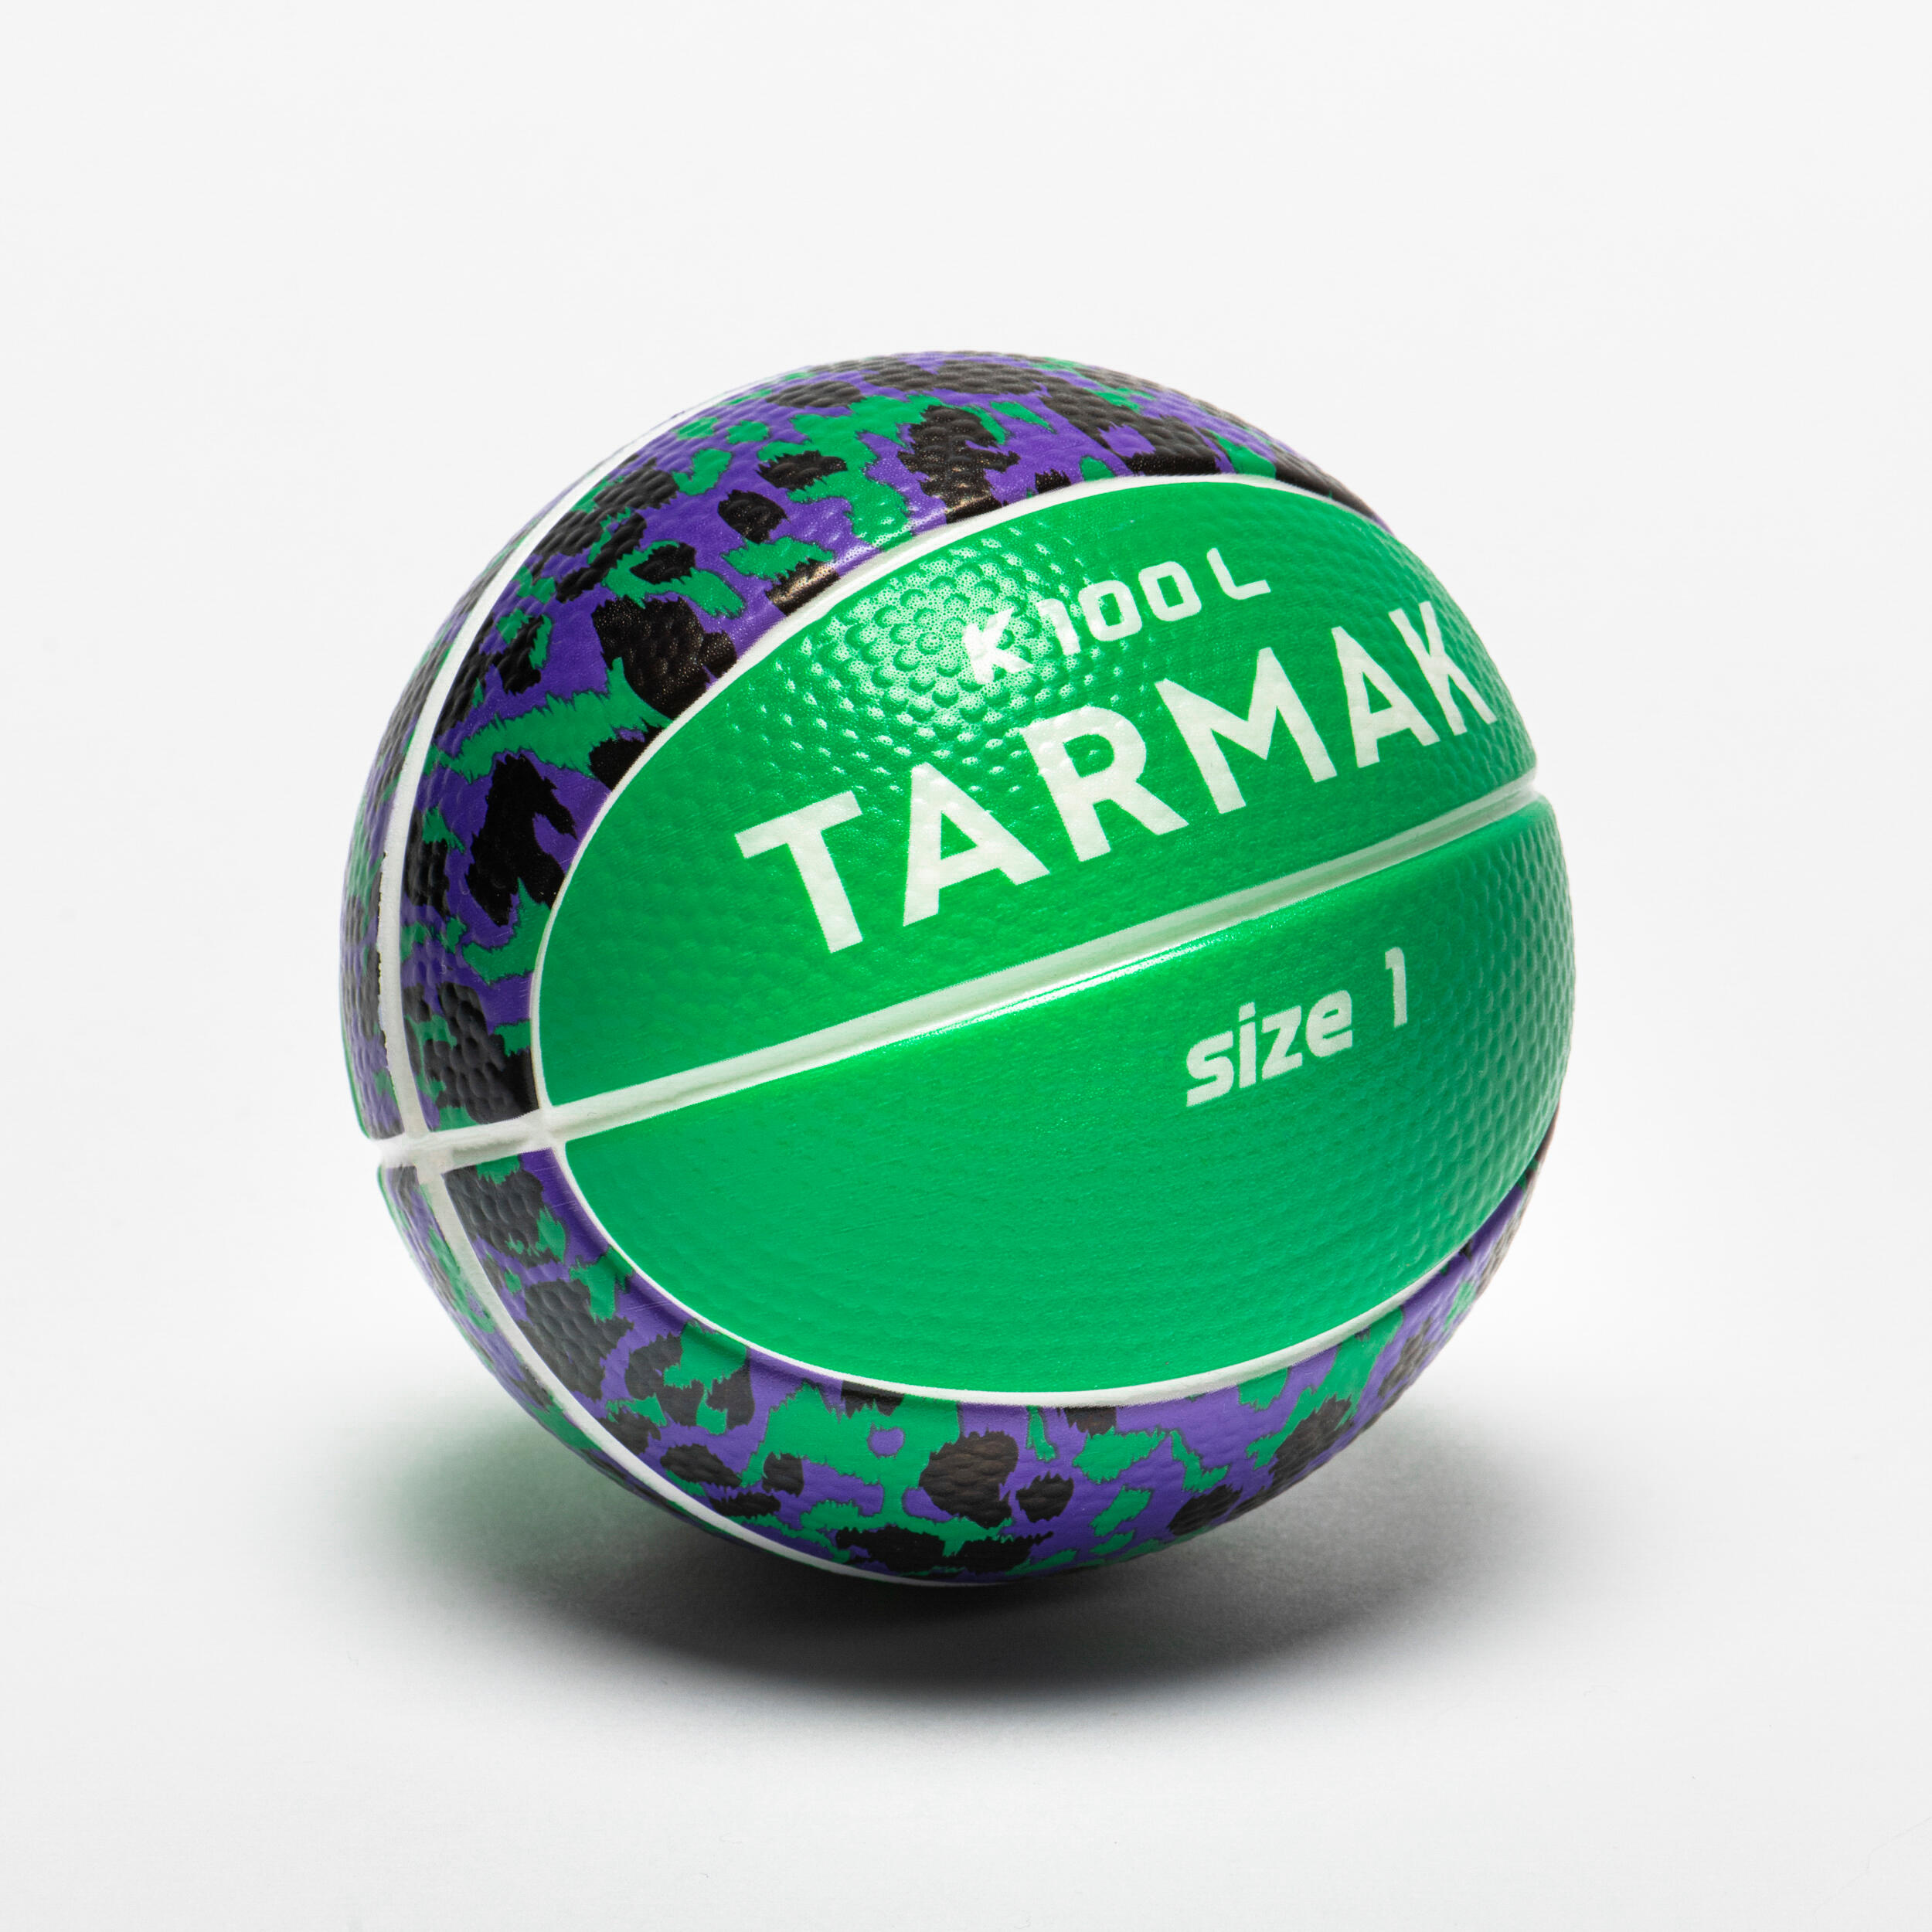 Kids' Mini Foam Basketball Size 1 K100 - Green/Black 2/5